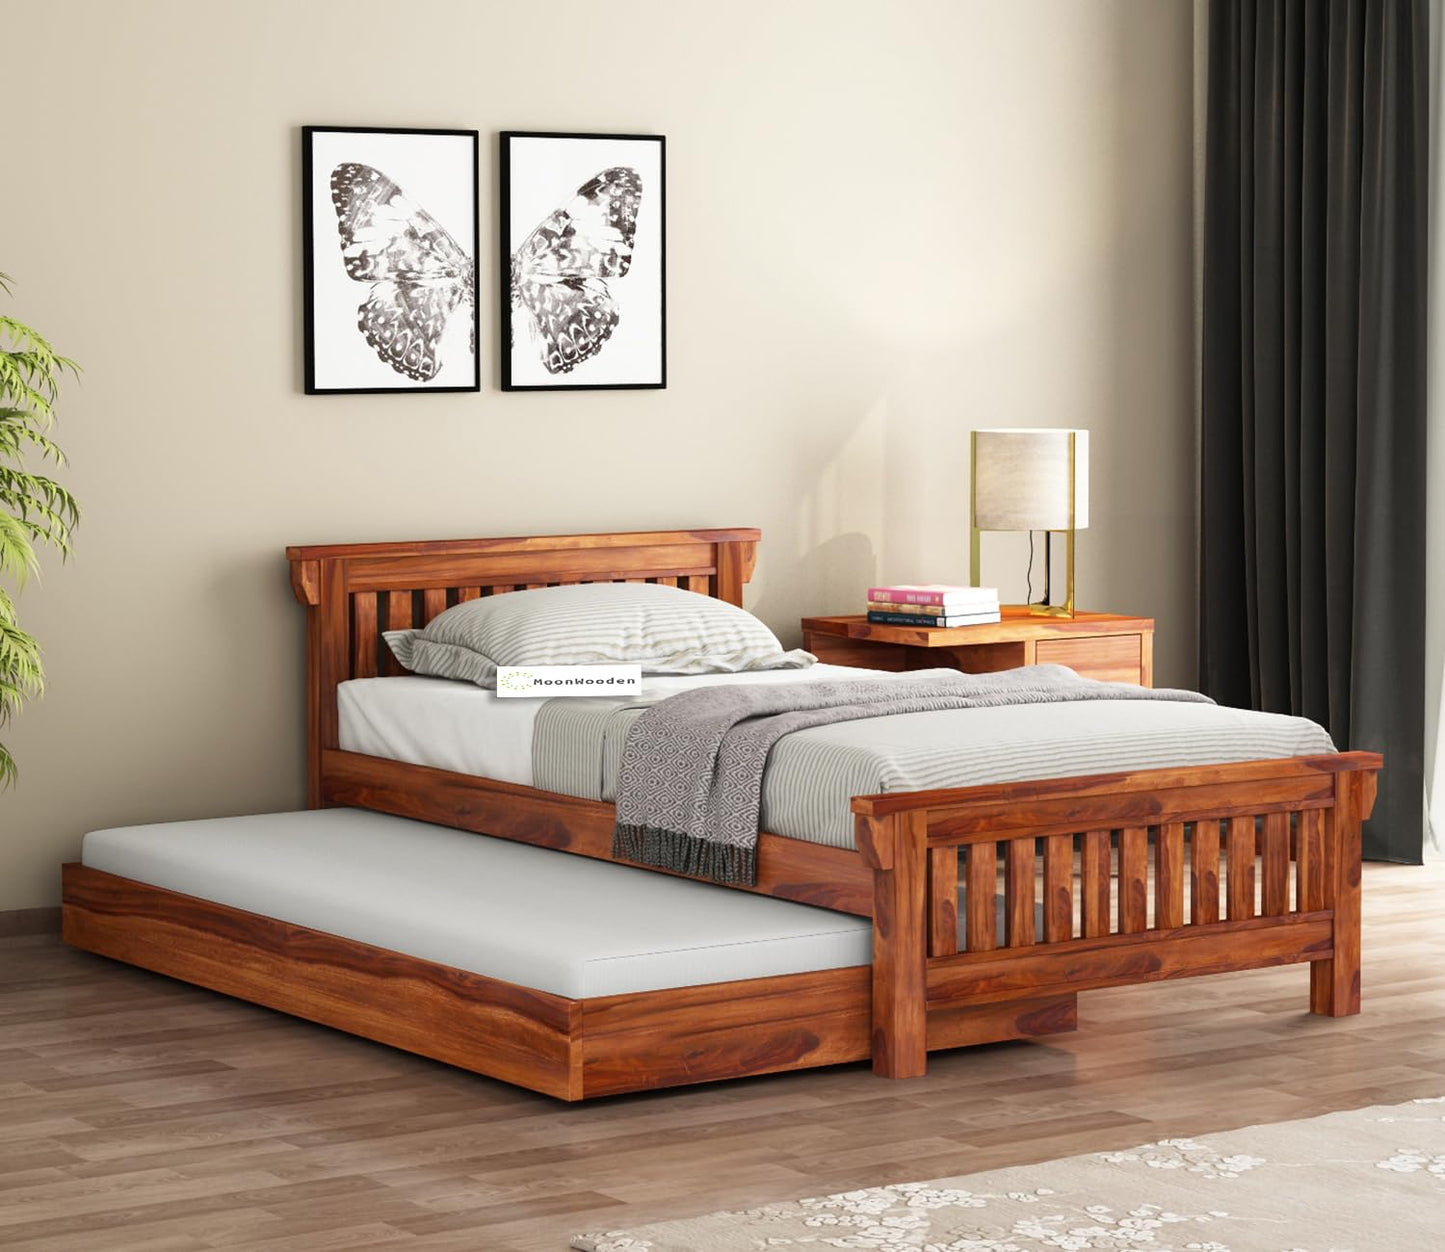 MoonWooden Solid Sheesham Wood Single Bed with Drawer Storage - Elegant and Functional Bedroom Furniture (Honey Finish)